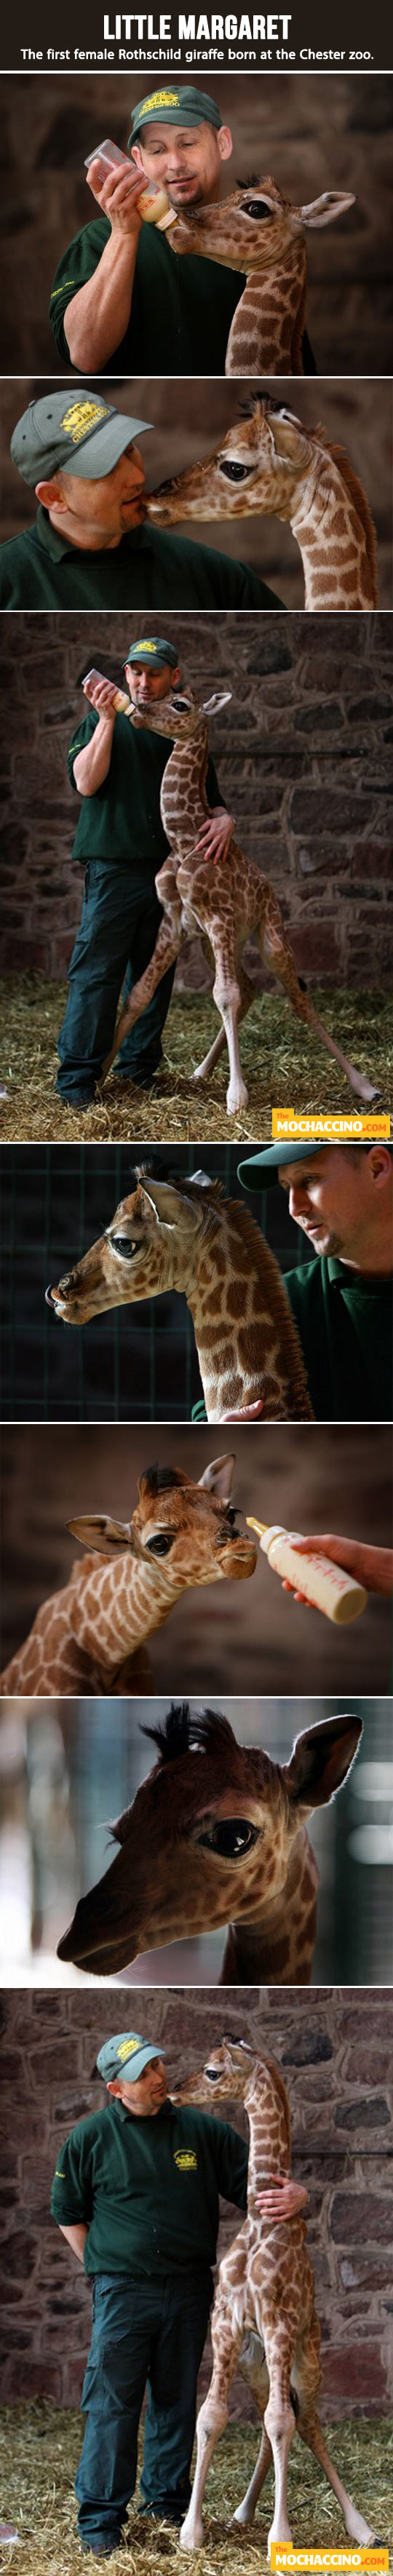 Meet Little Margaret - The adorable baby giraffe.